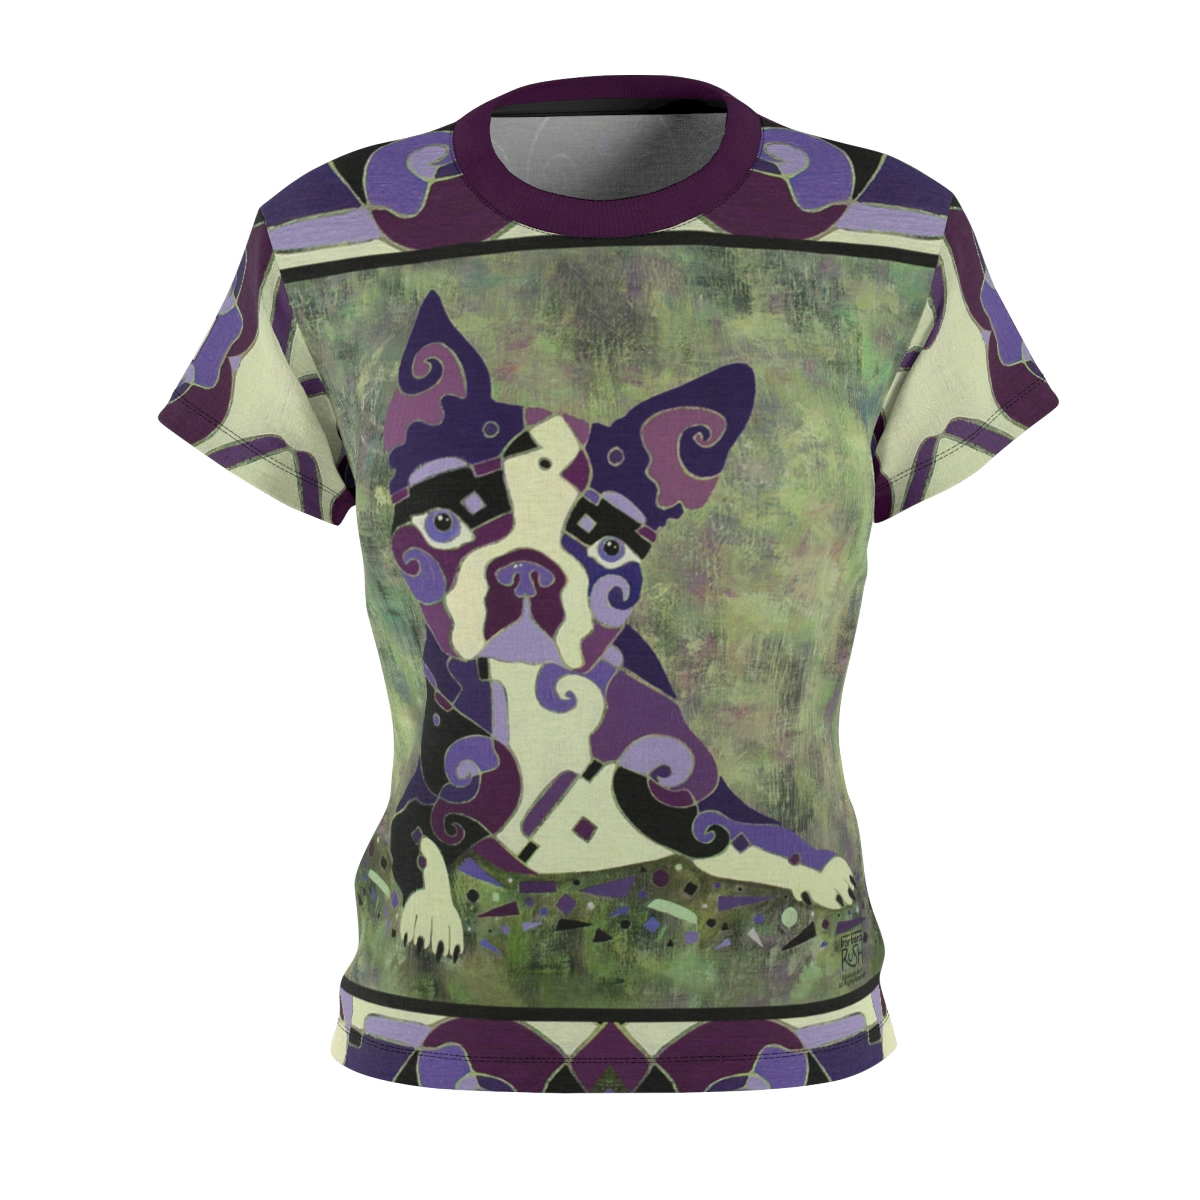 Calico Cat High Fashion Sweatshirt Colorful Cat Garment - Barbara Rush Fine  Art